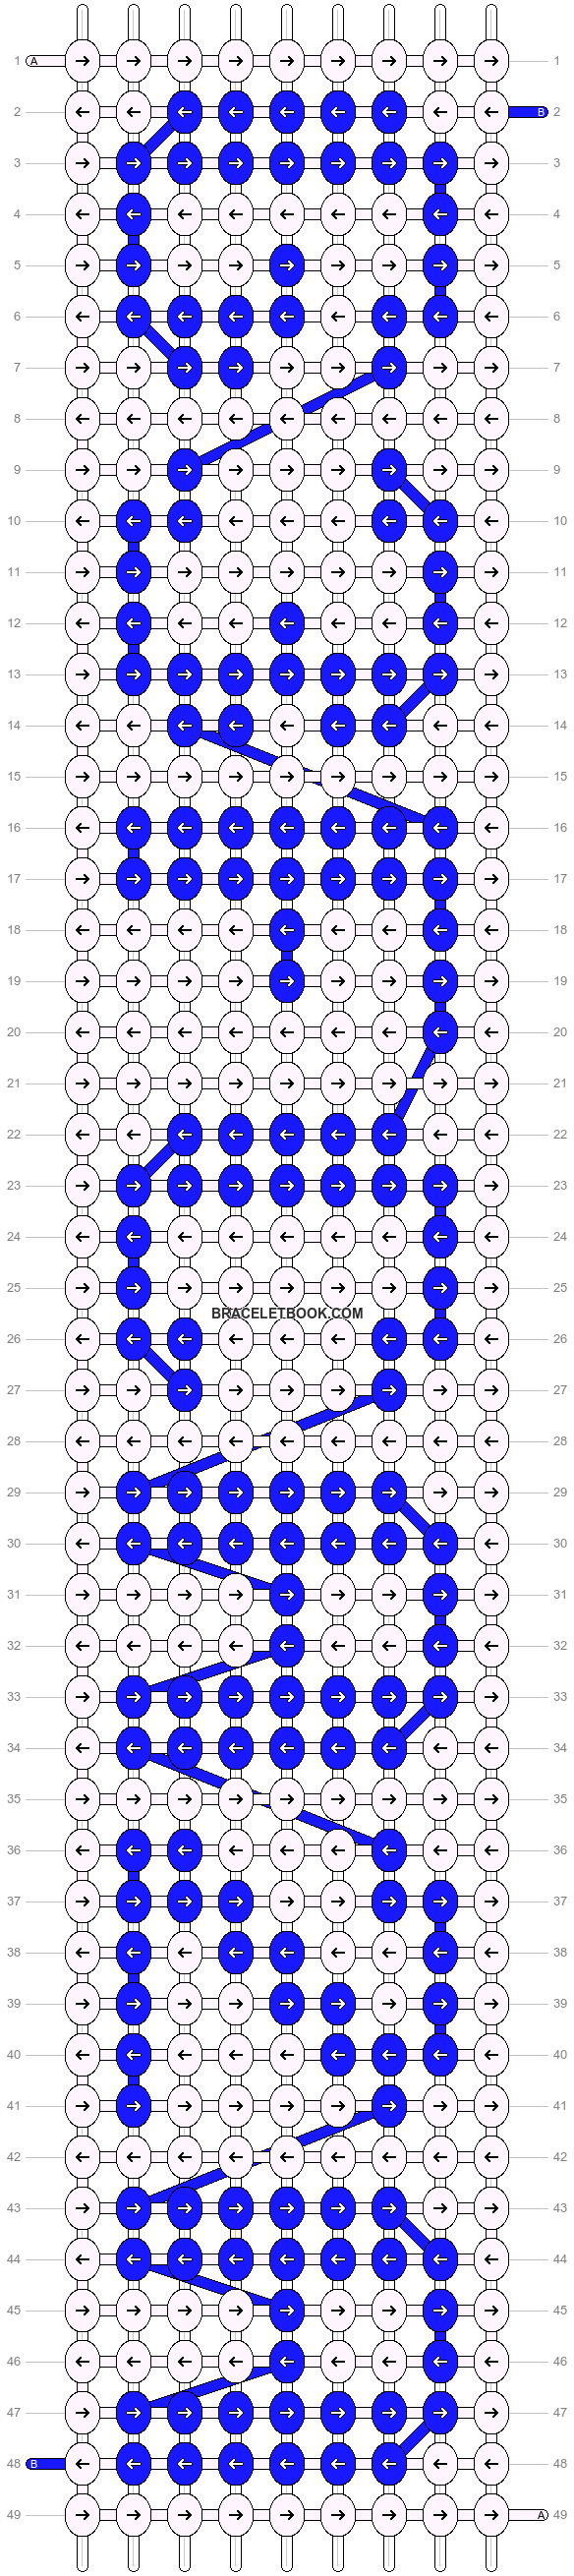 Alpha pattern #6827 variation #76890 pattern